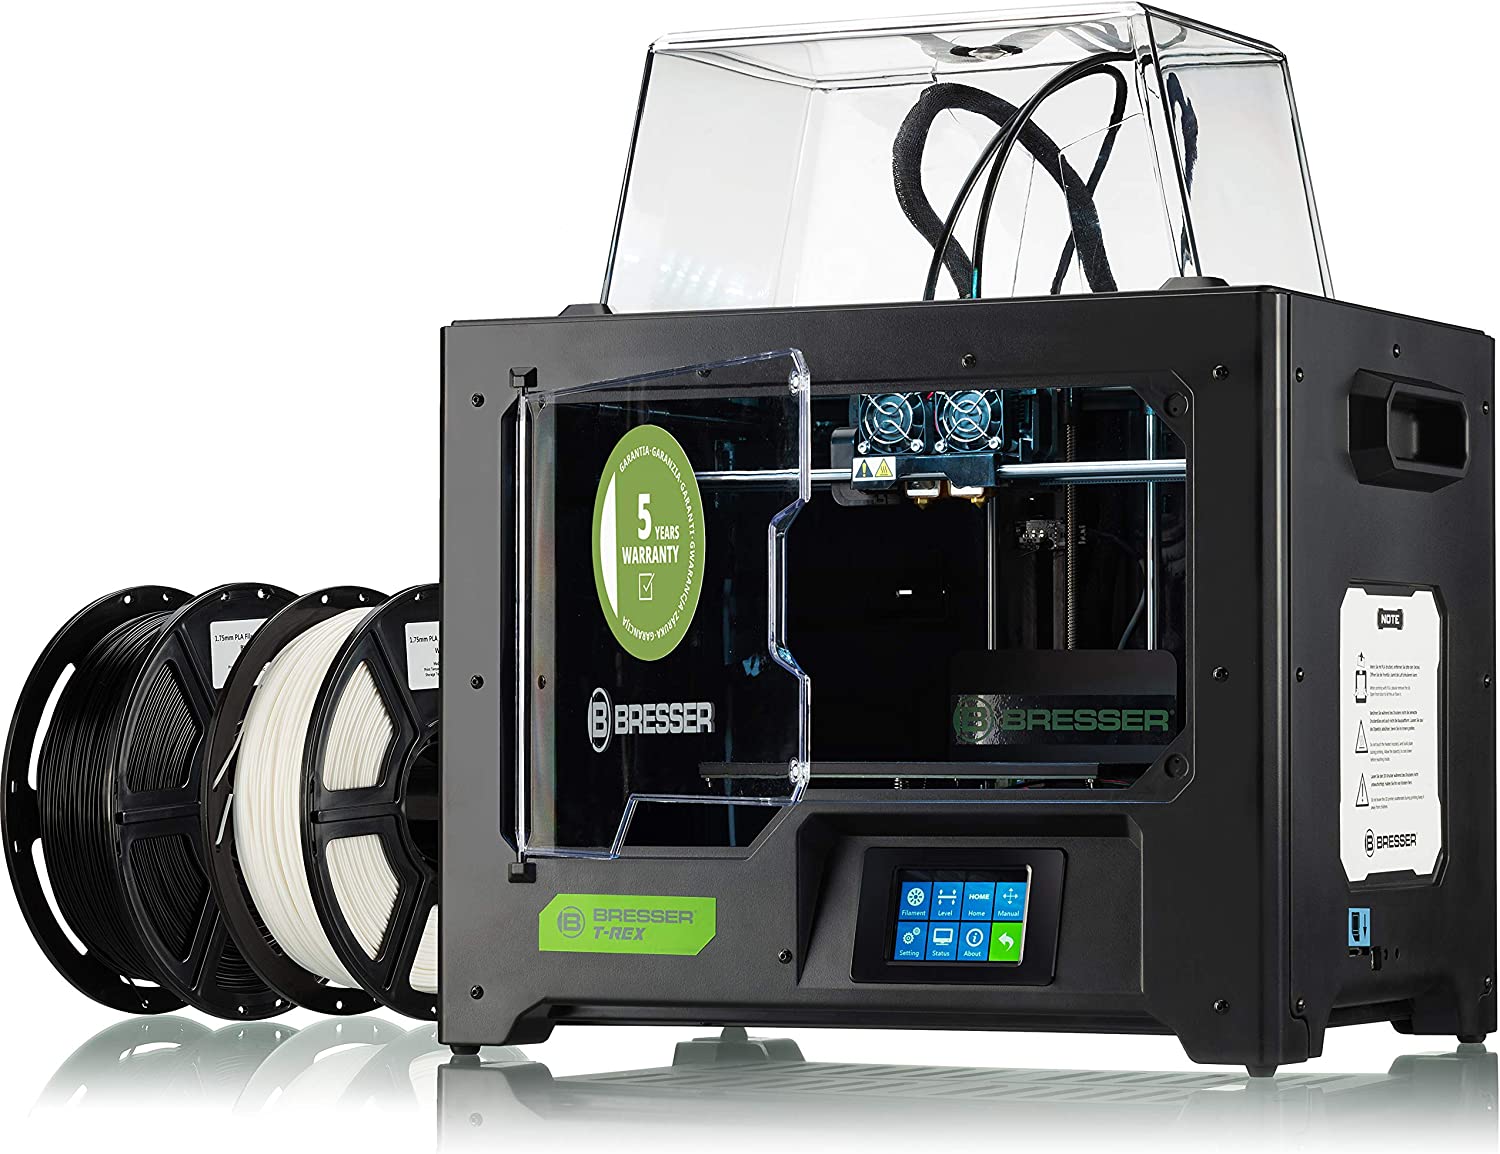 semiconductor bufanda entrada Bresser Impresora 3D Doble Extrusor T-Rex - DiscoAzul.com